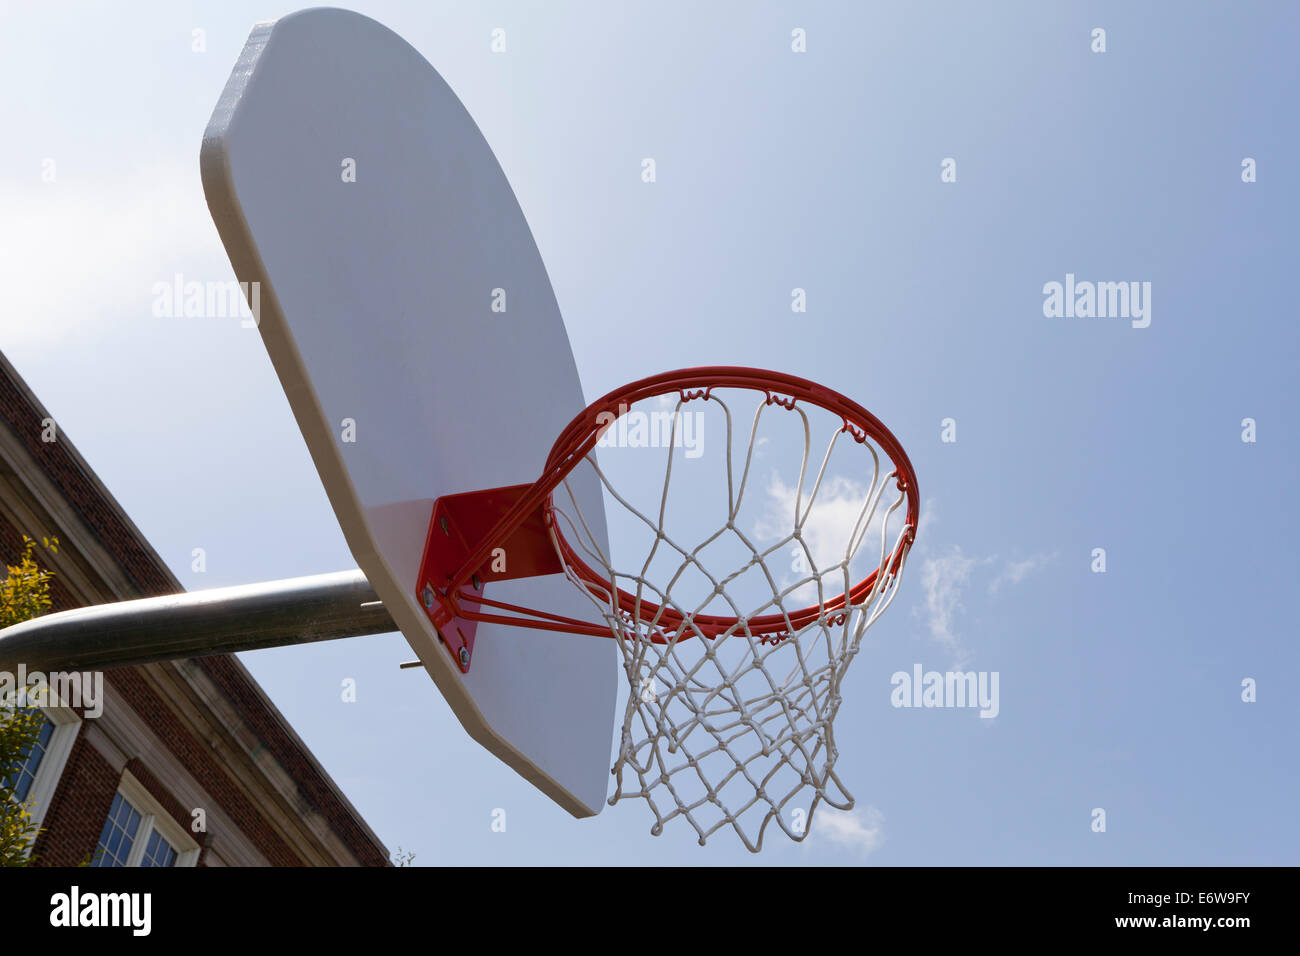 Basketball hoop from below Stock Photo